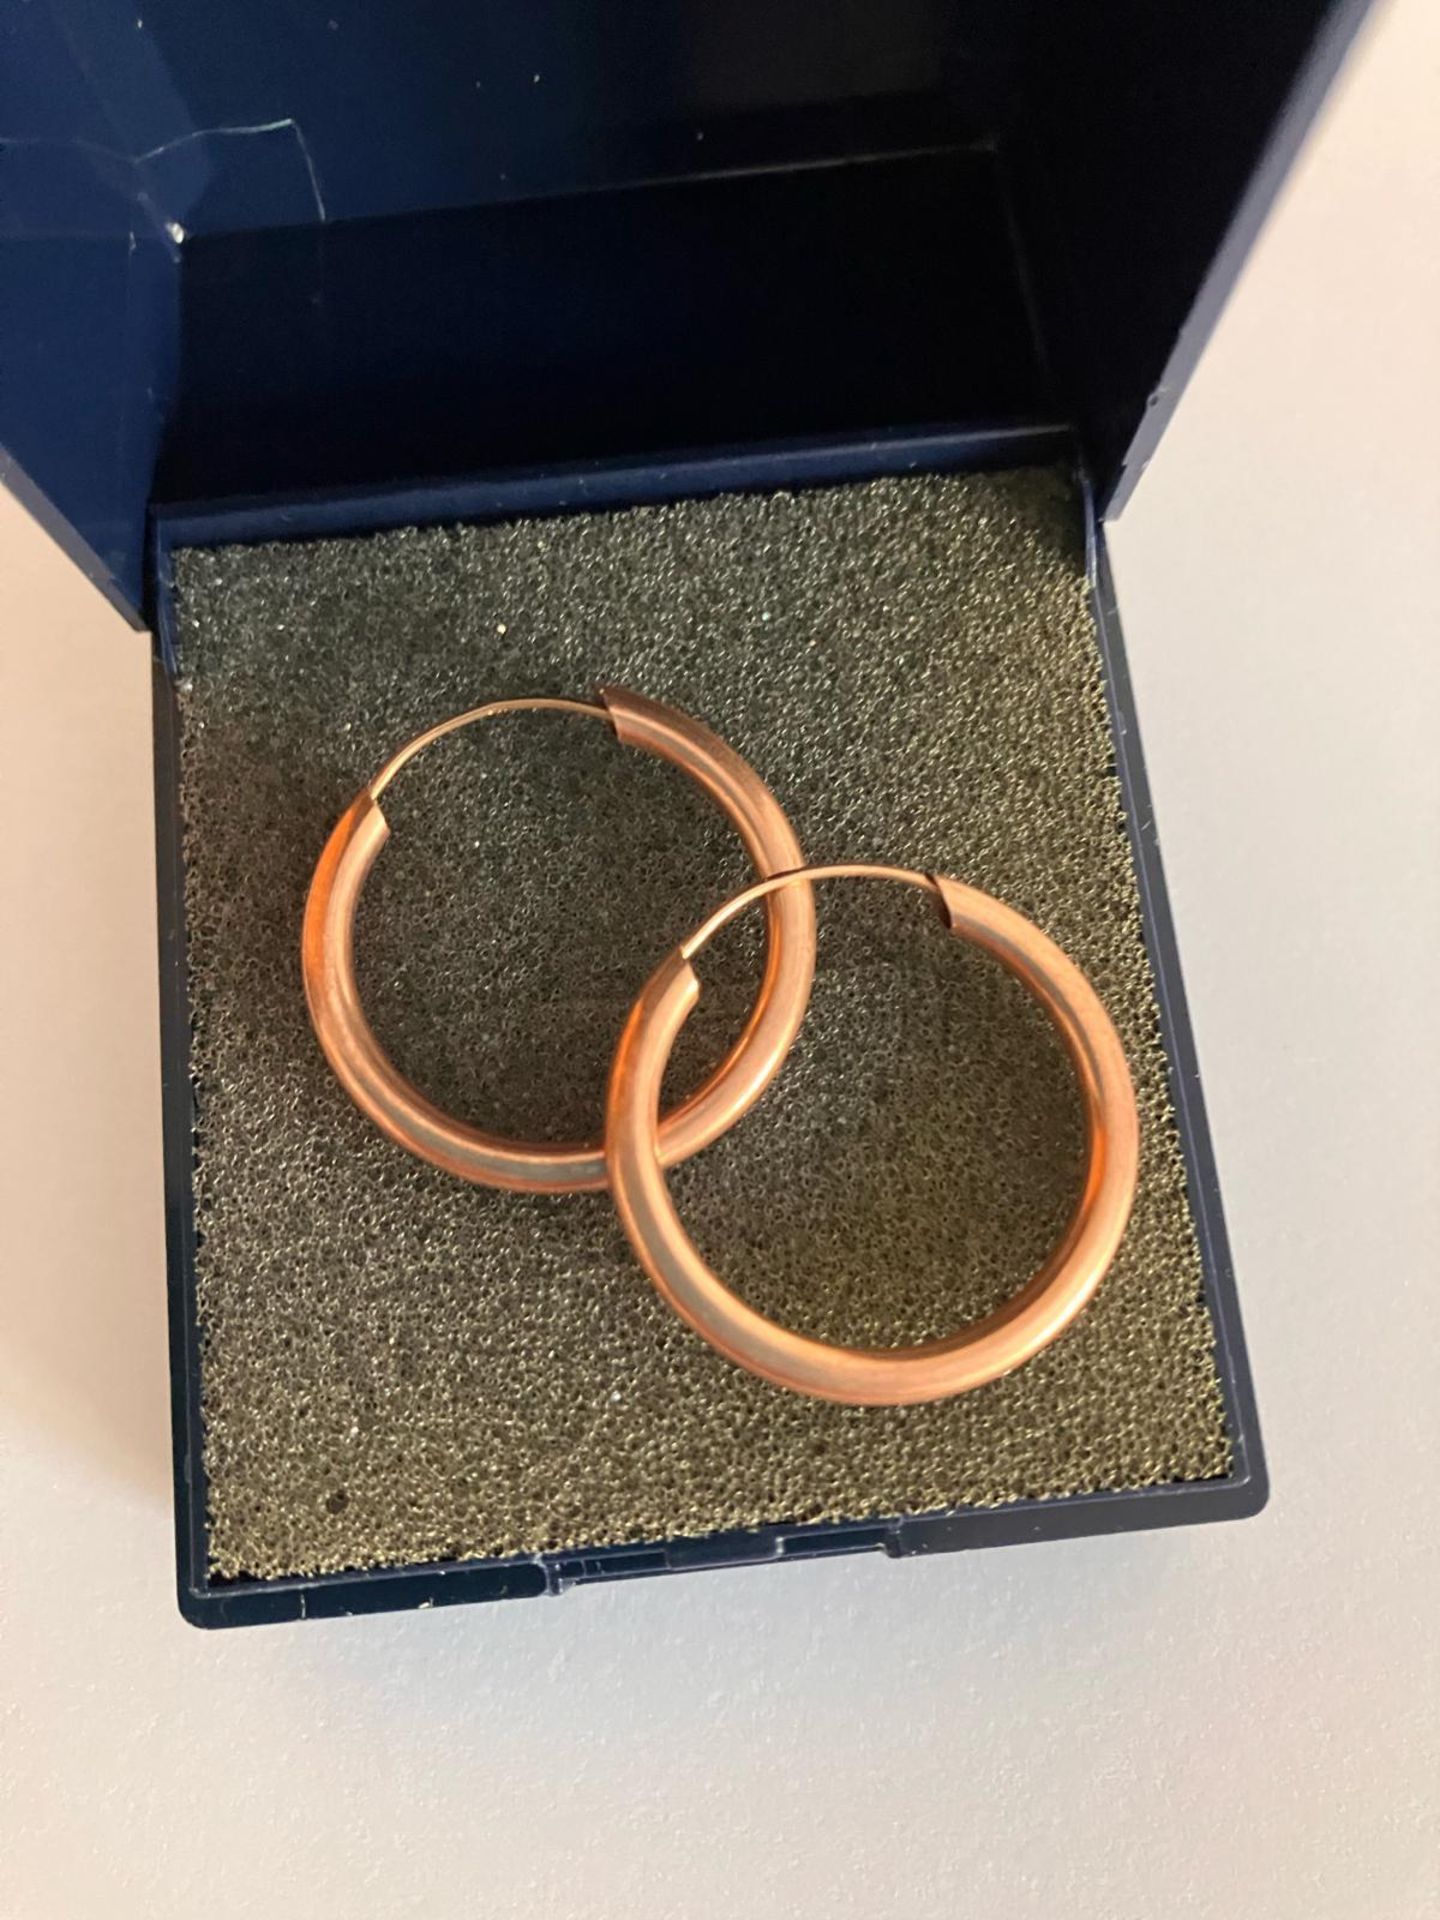 Pair of simple classic 9 carat ROSE GOLD HOOP EARRINGS. 2.0 cm diameter.0.82 grams.